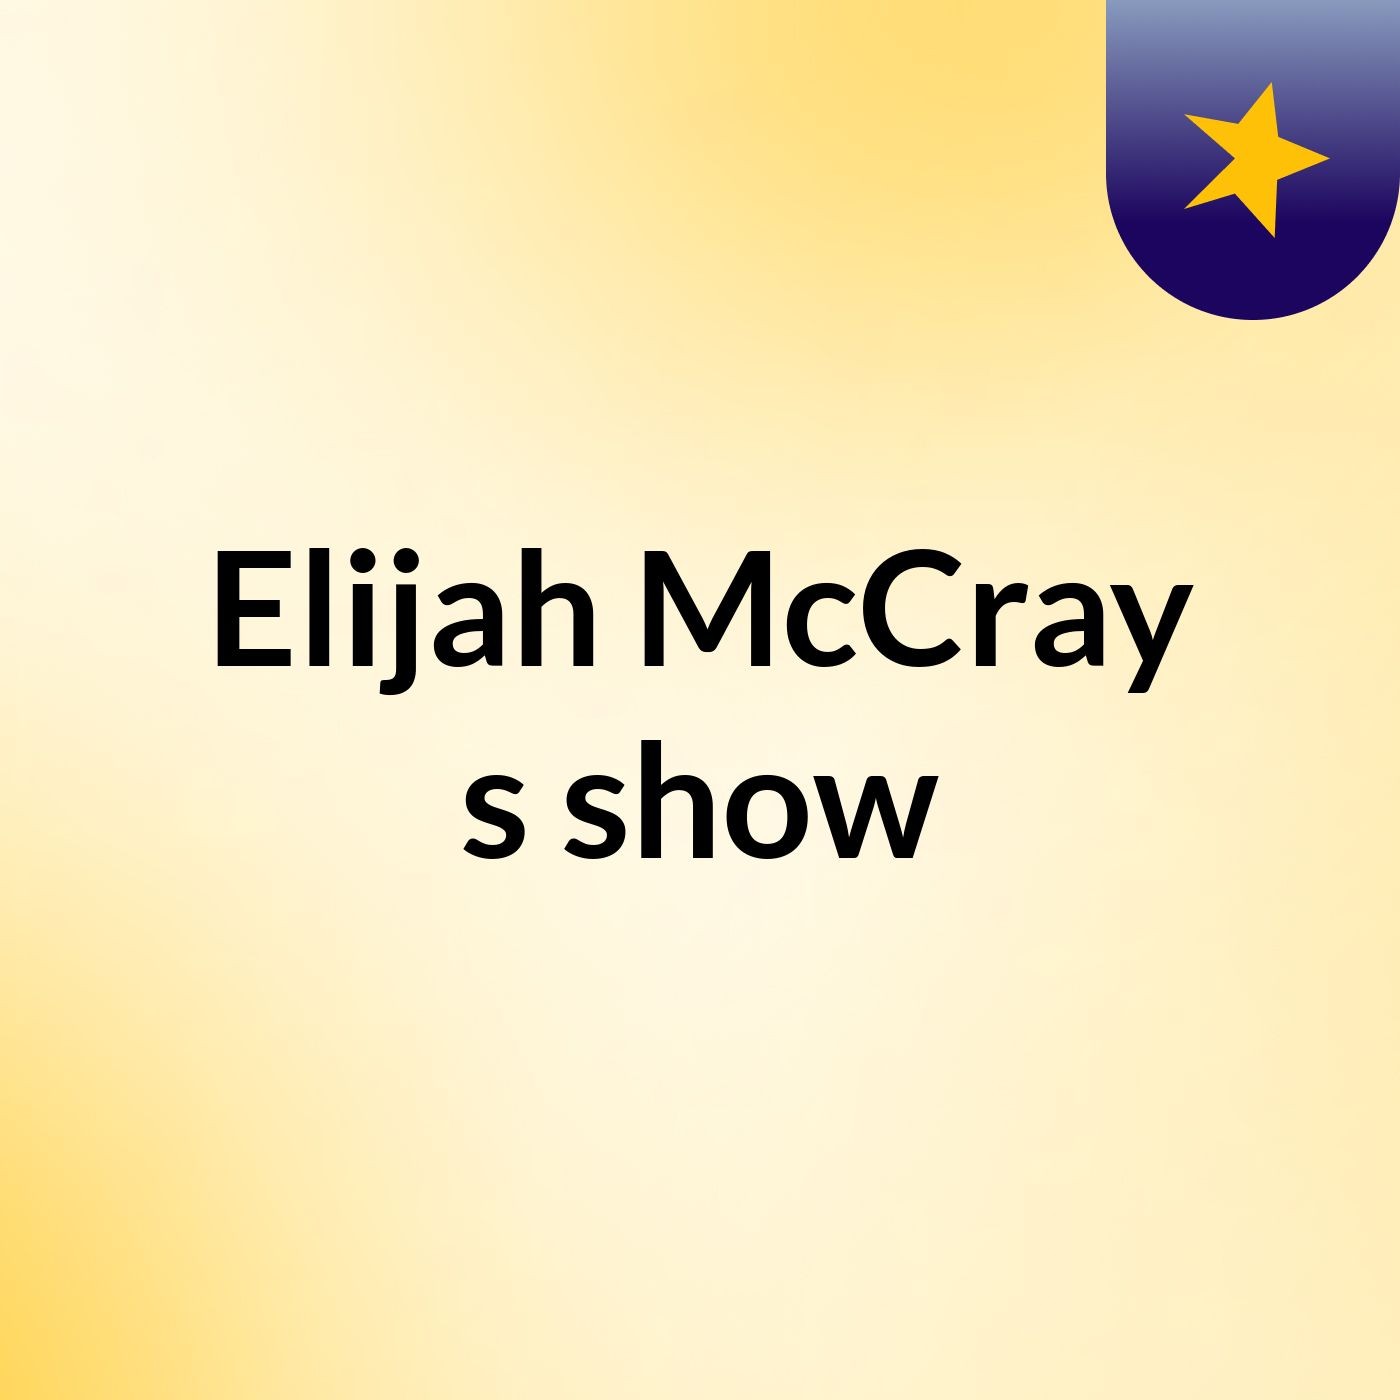 Episode 5 - Elijah McCray's show